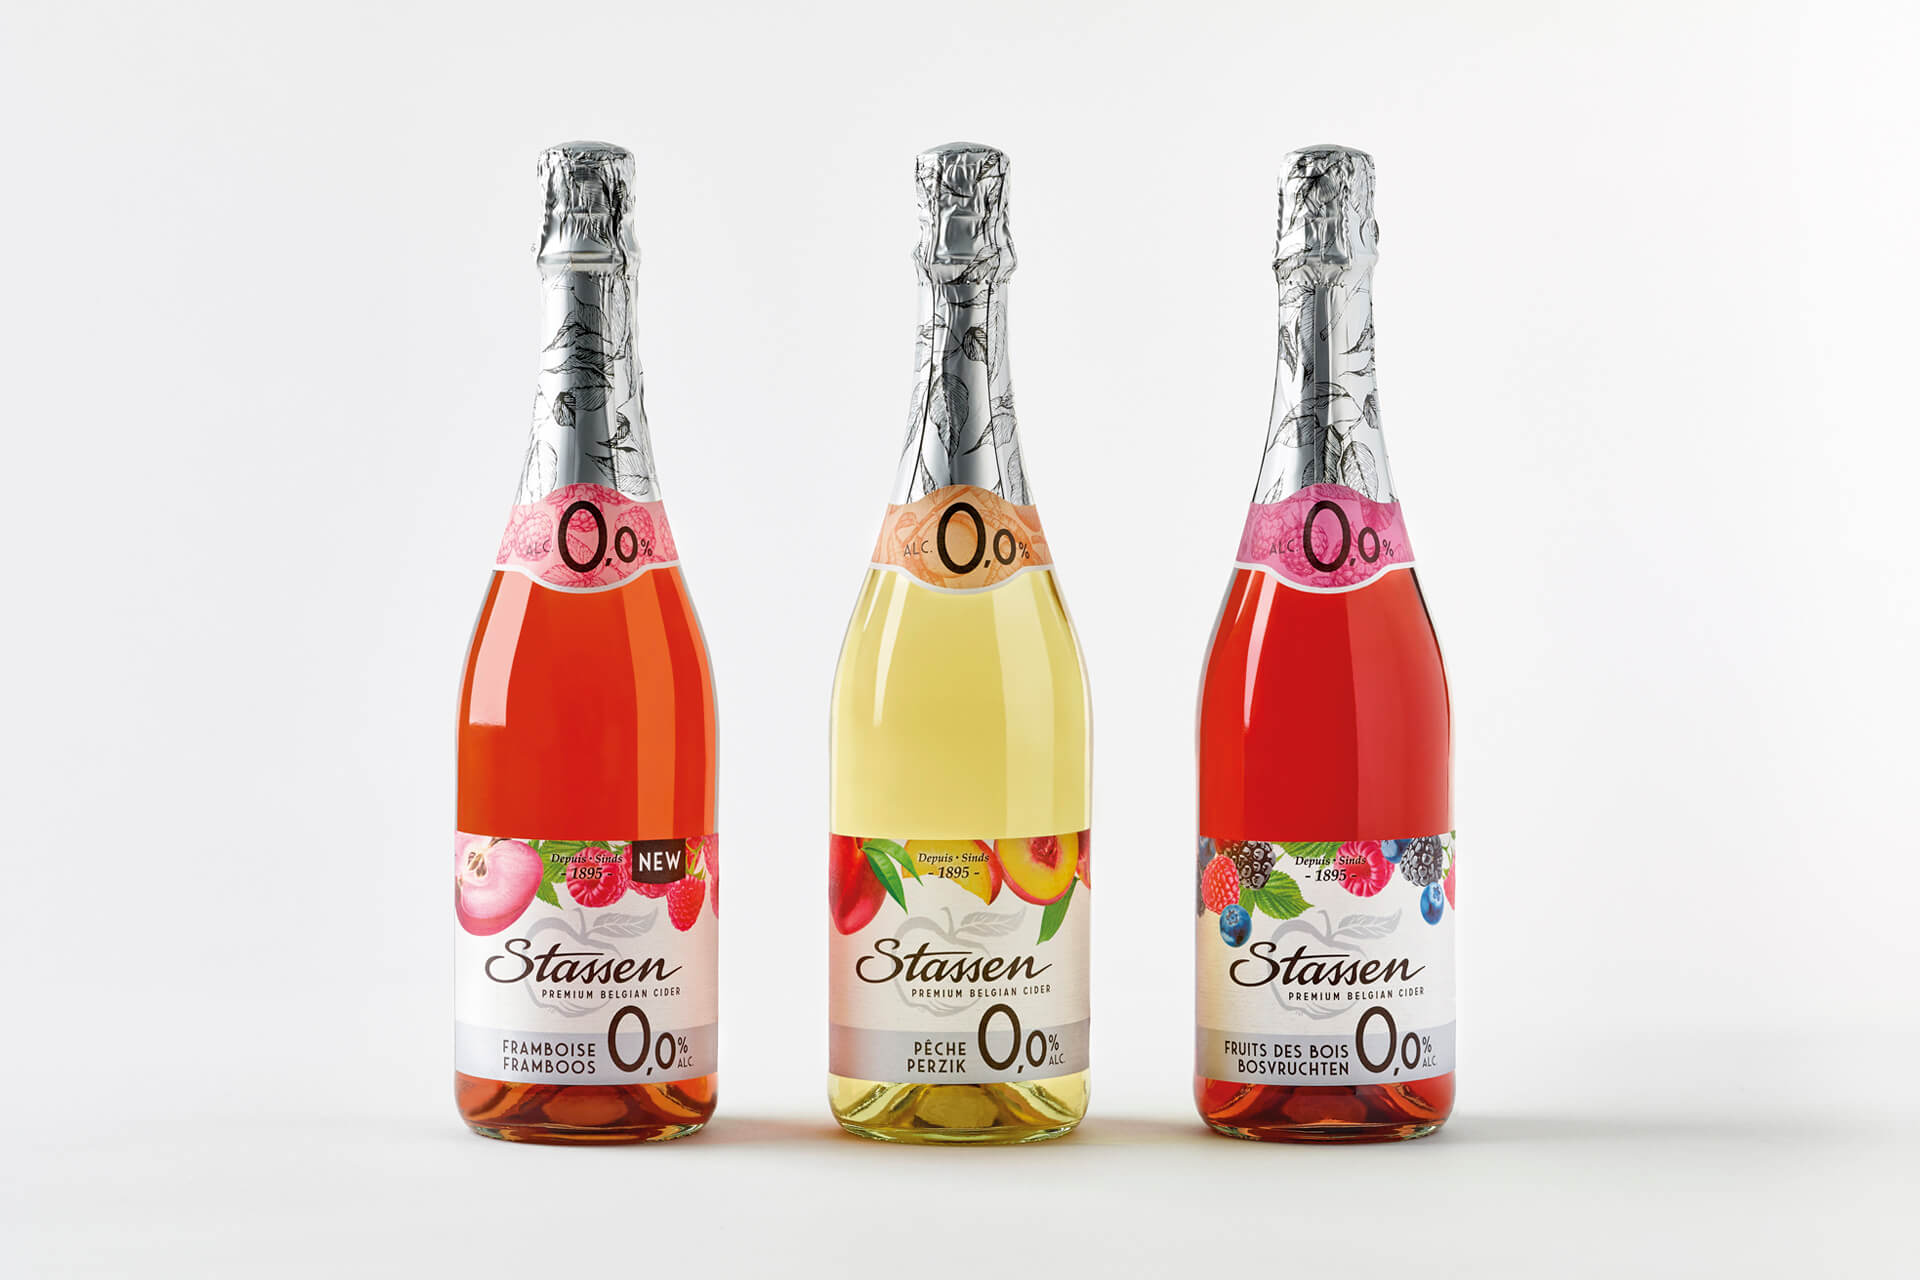 Fresh design by DesignRepublic for Stassen - Stassen Fruit Cider Packaging